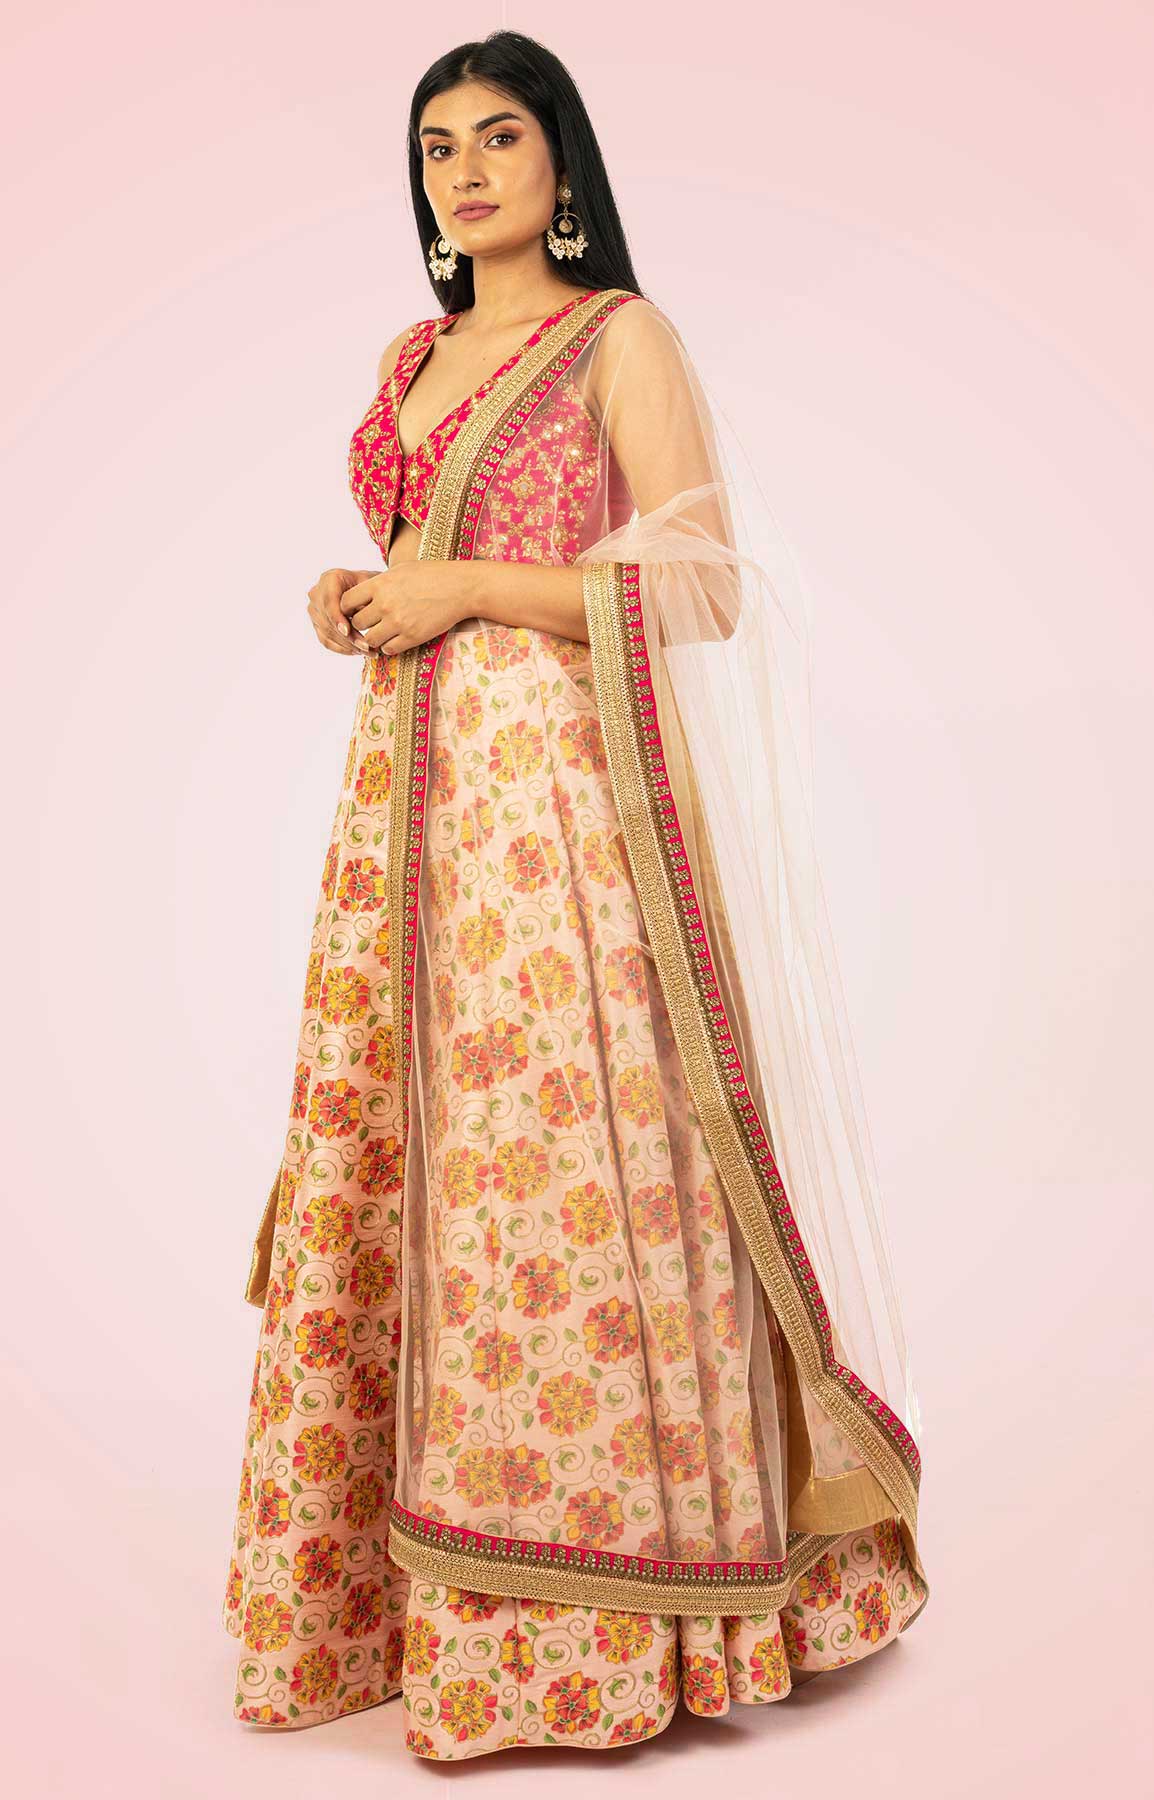 Floral Print Pink Lehenga With Mirror Work Blouse And Beige Colour Dupatta – Viraaya By Ushnakmals